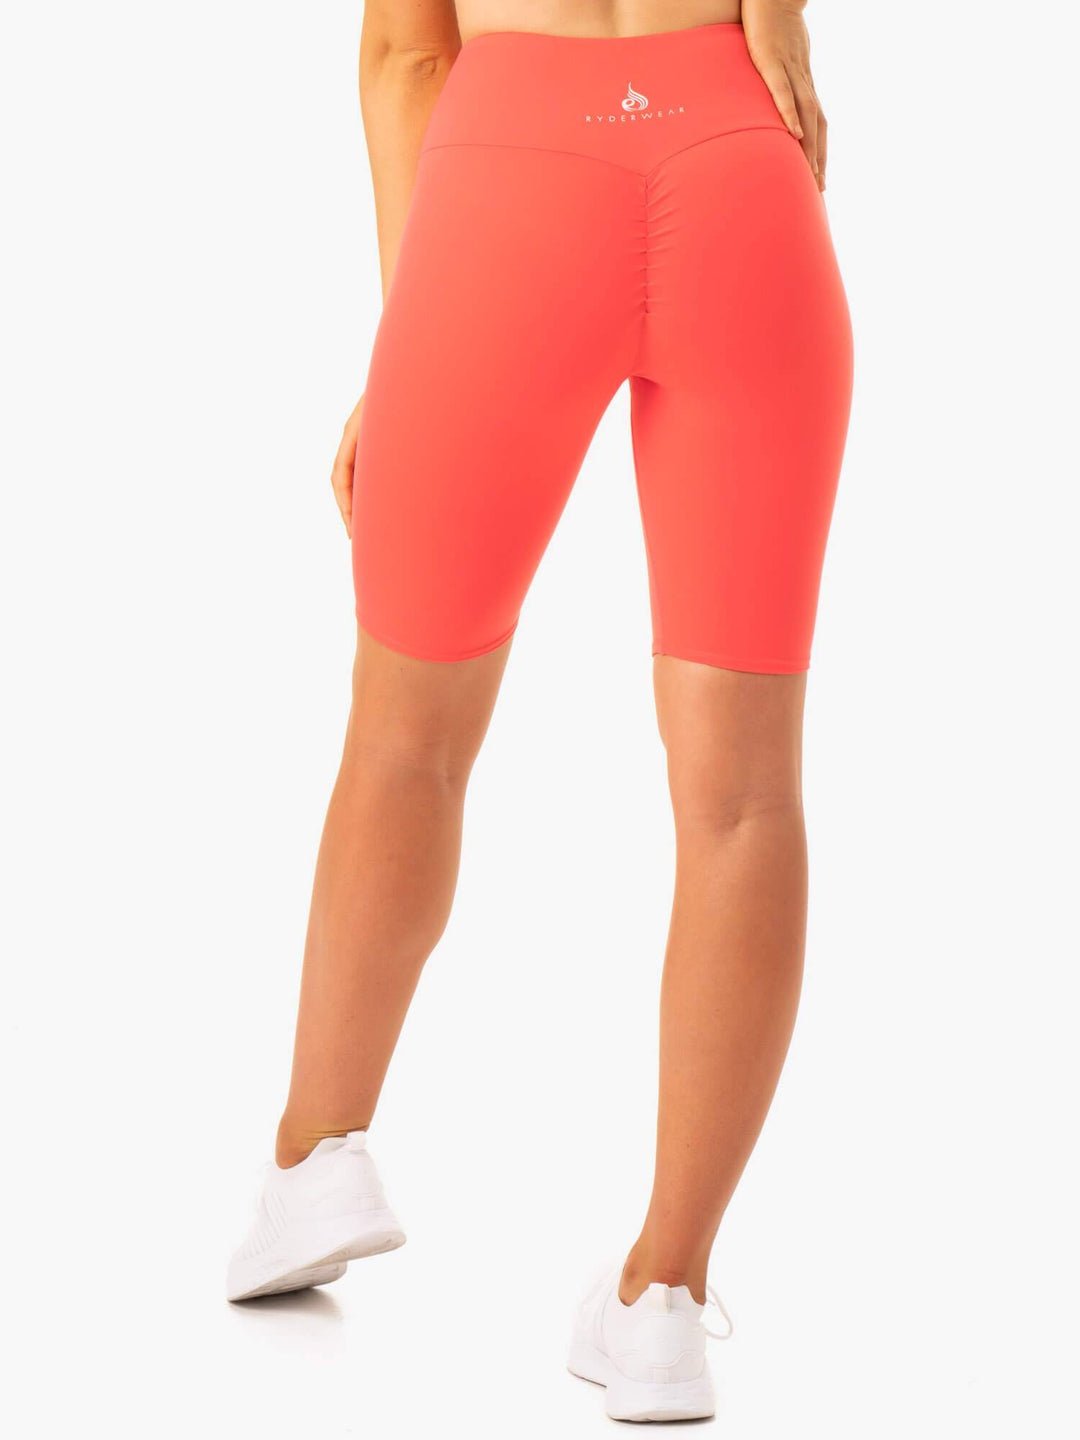 Staples Scrunch Bum Bike Shorts - Coral Clothing Ryderwear 